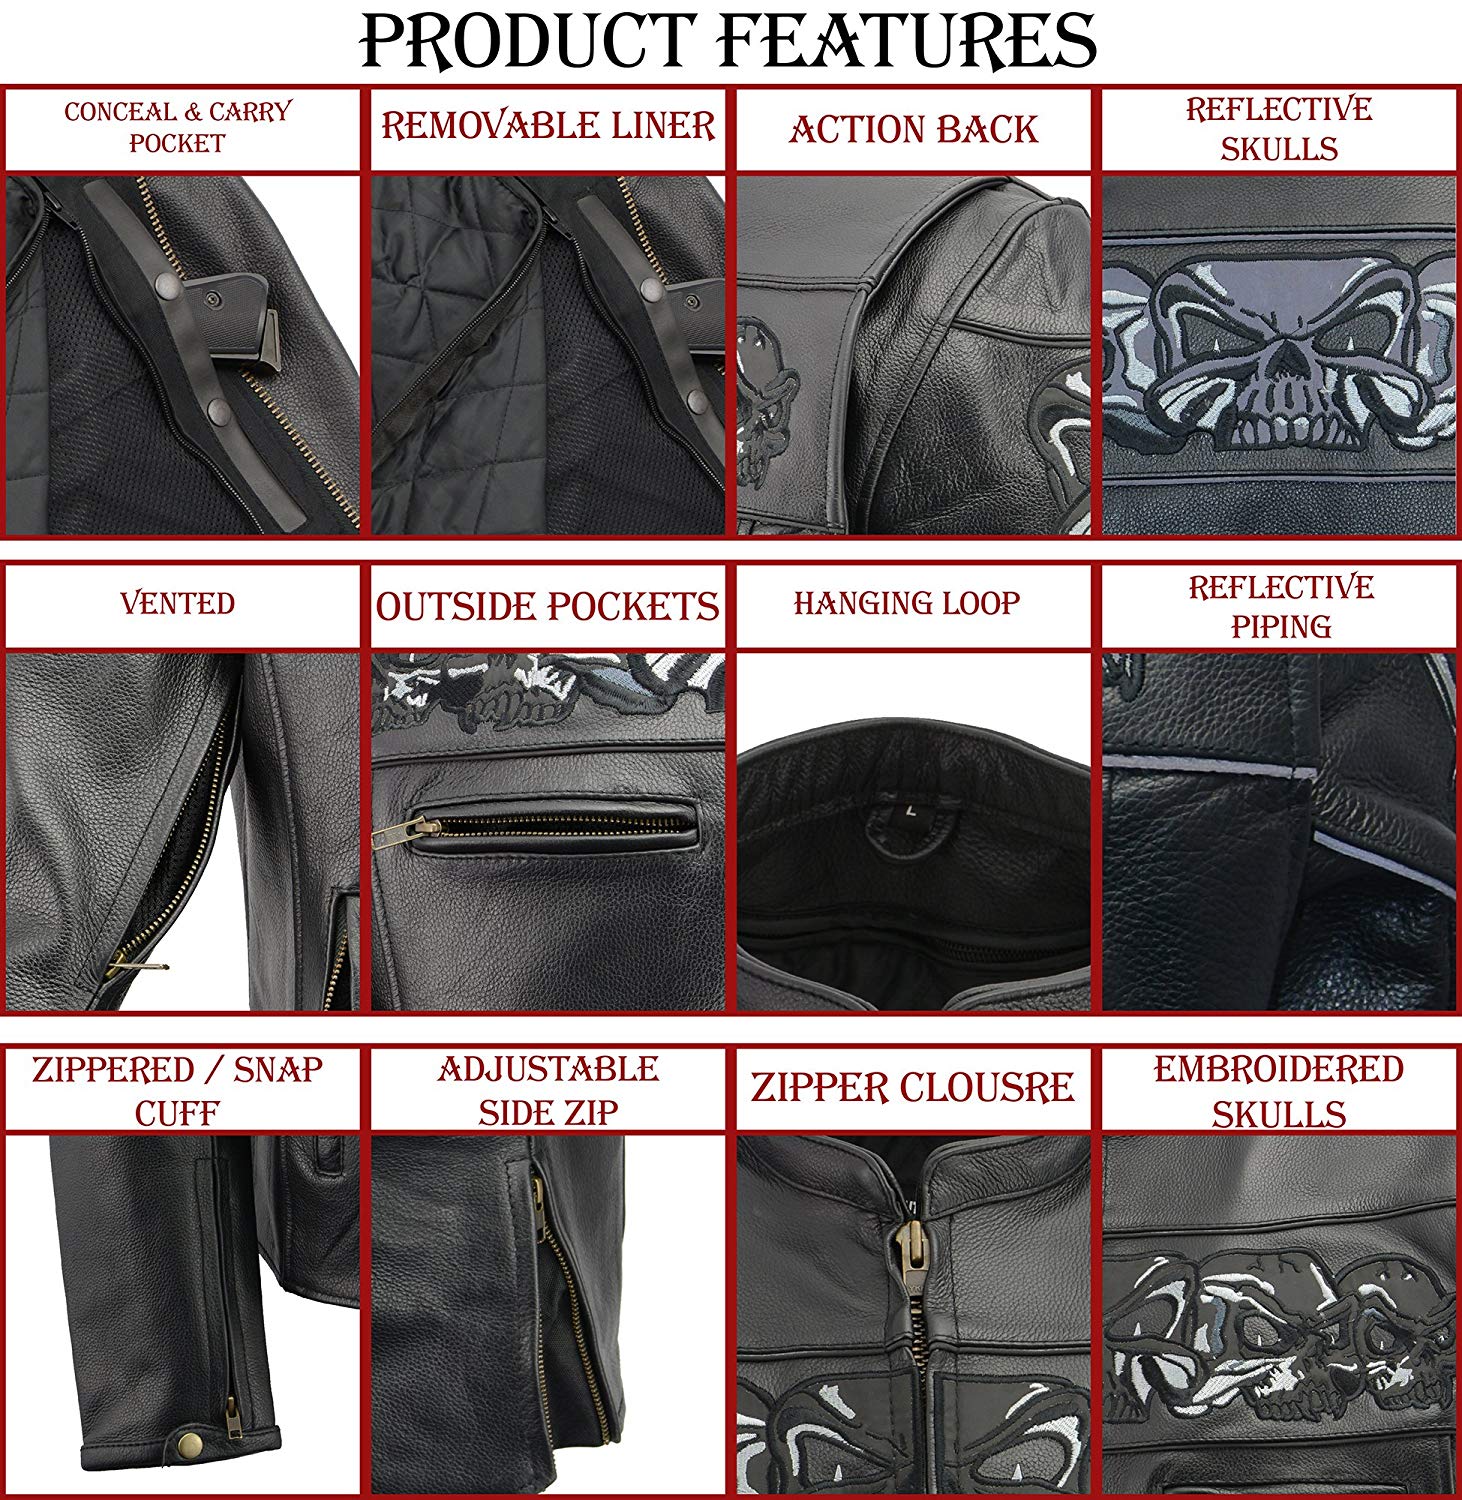 M Boss Motorcycle Apparel BOS11514 Men’s Black Reflective Skull Premium Cowhide Leather Motorcycle Jacket